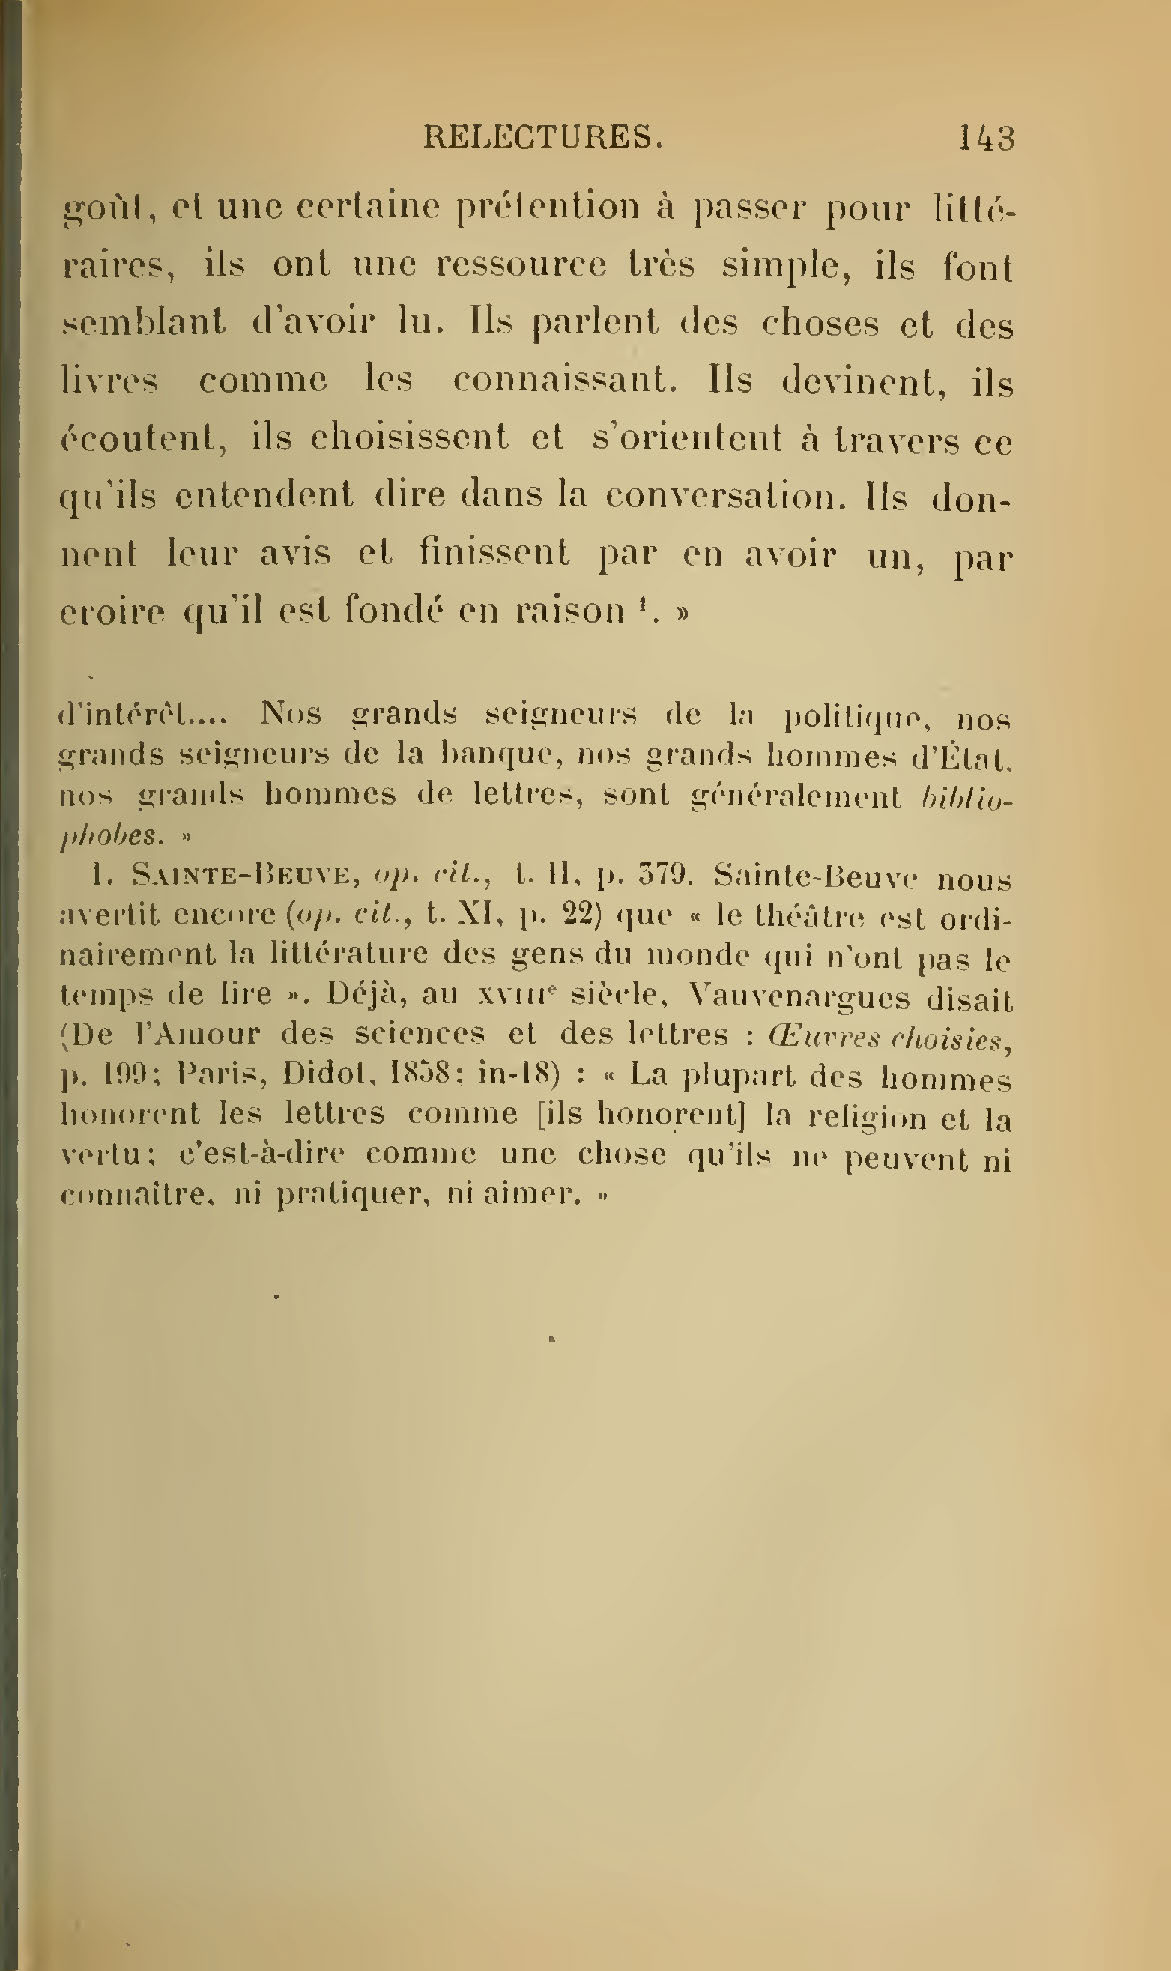 Albert Cim, Le Livre, t. II, p. 143.